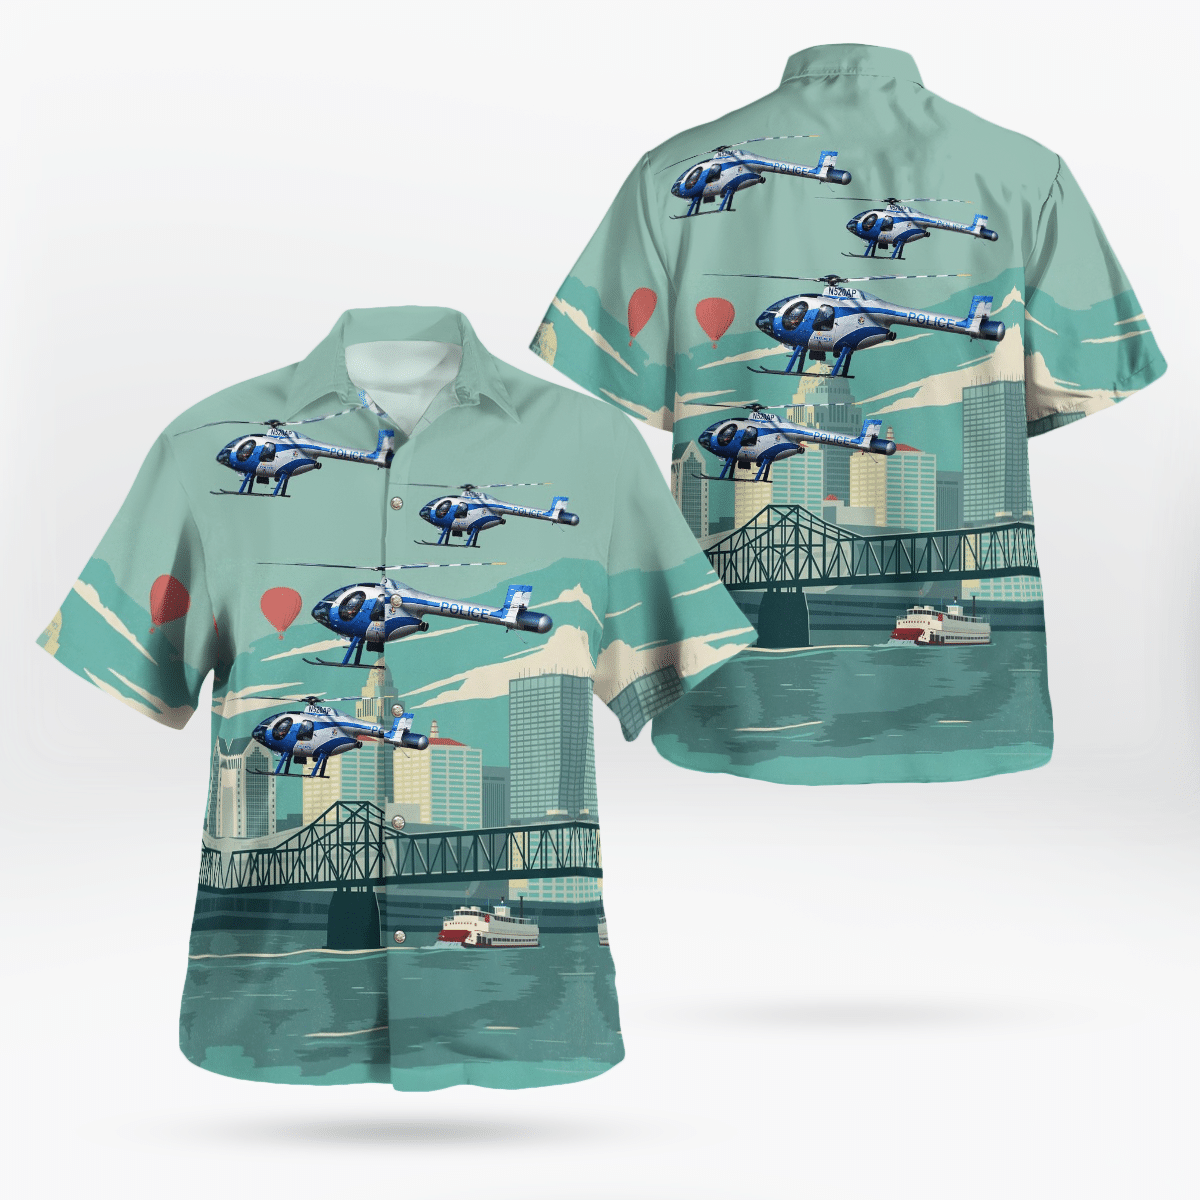 Listed below are some High-quality Aloha Shirt 423